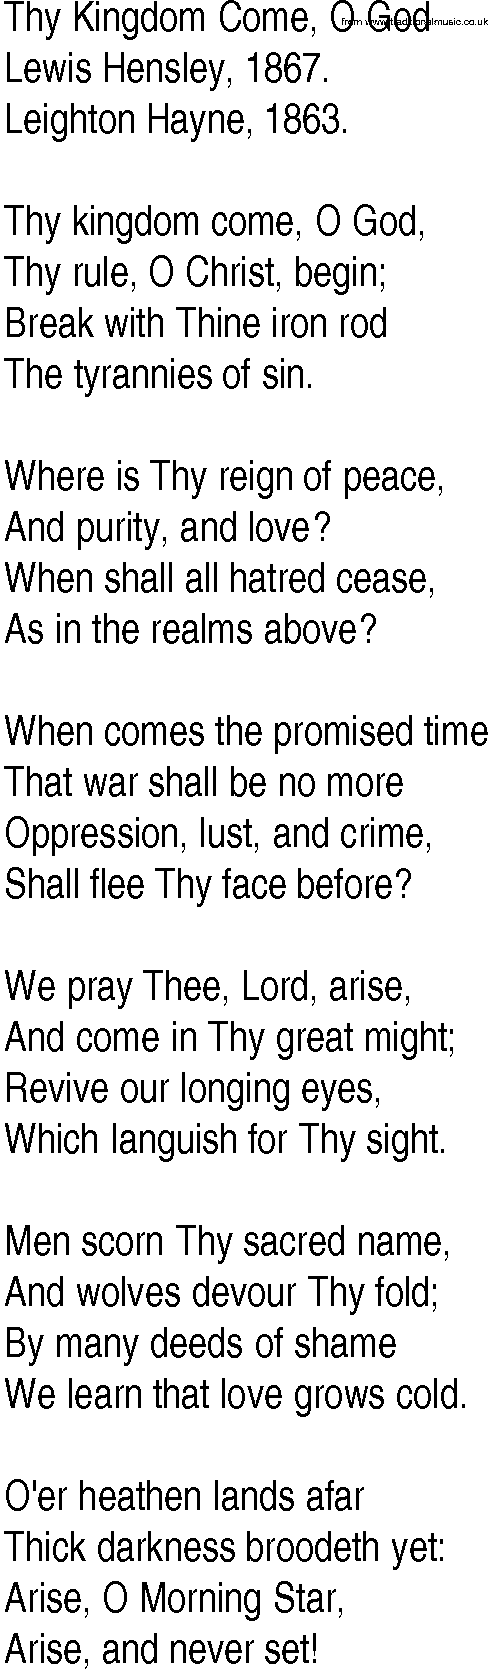 Hymn and Gospel Song: Thy Kingdom Come, O God by Lewis Hensley lyrics